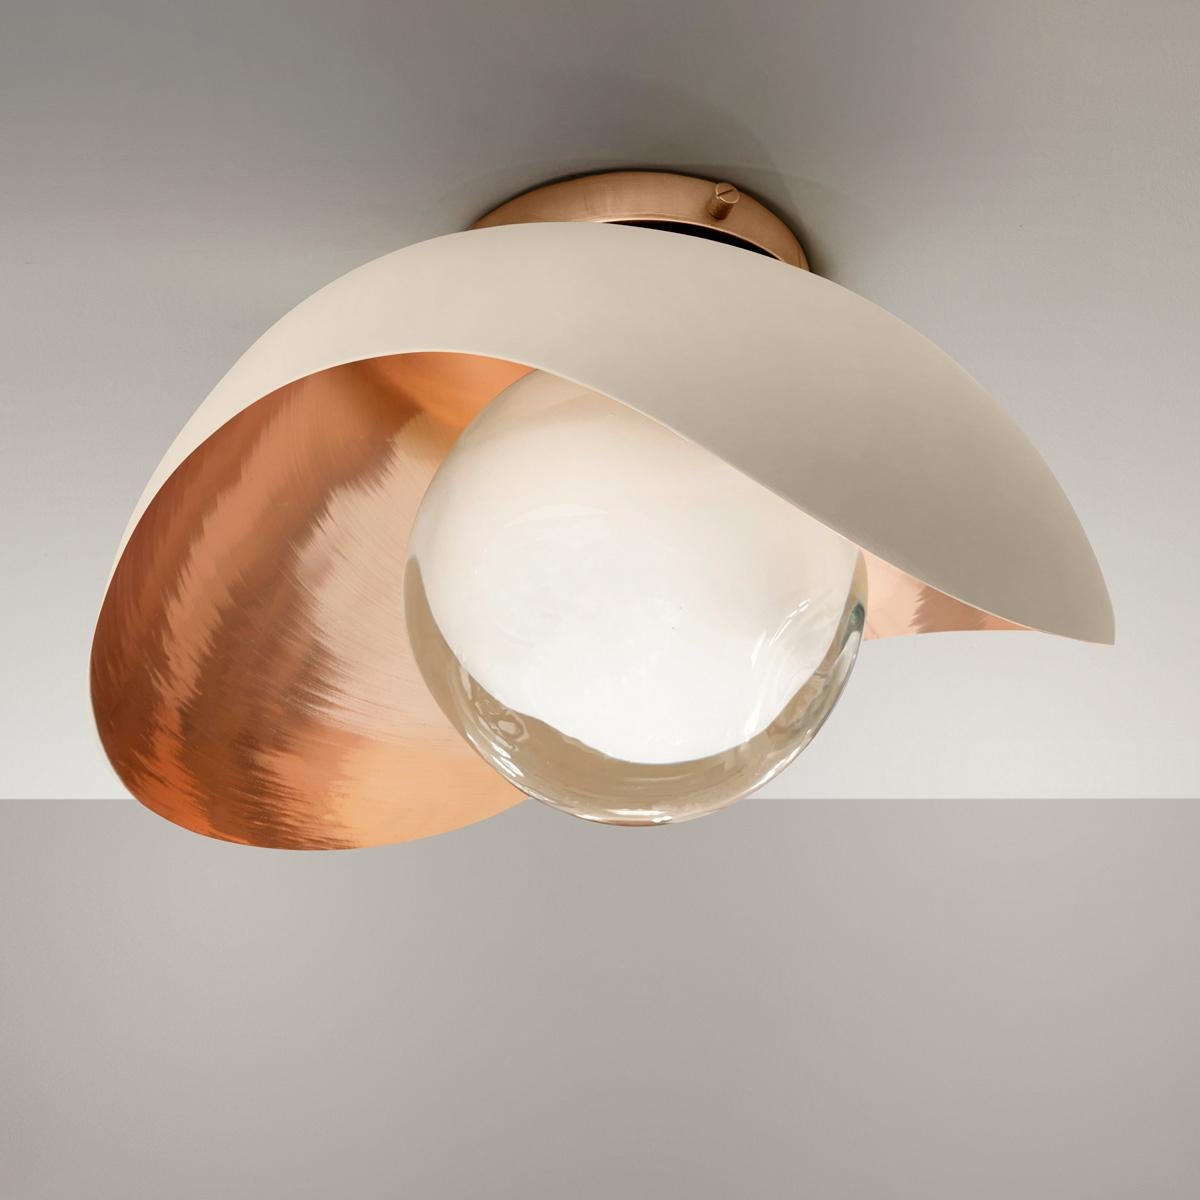 Perla Flushmount Ceiling Light by Gaspare Asaro-Satin Brass/Bronze Finish. For Sale 3